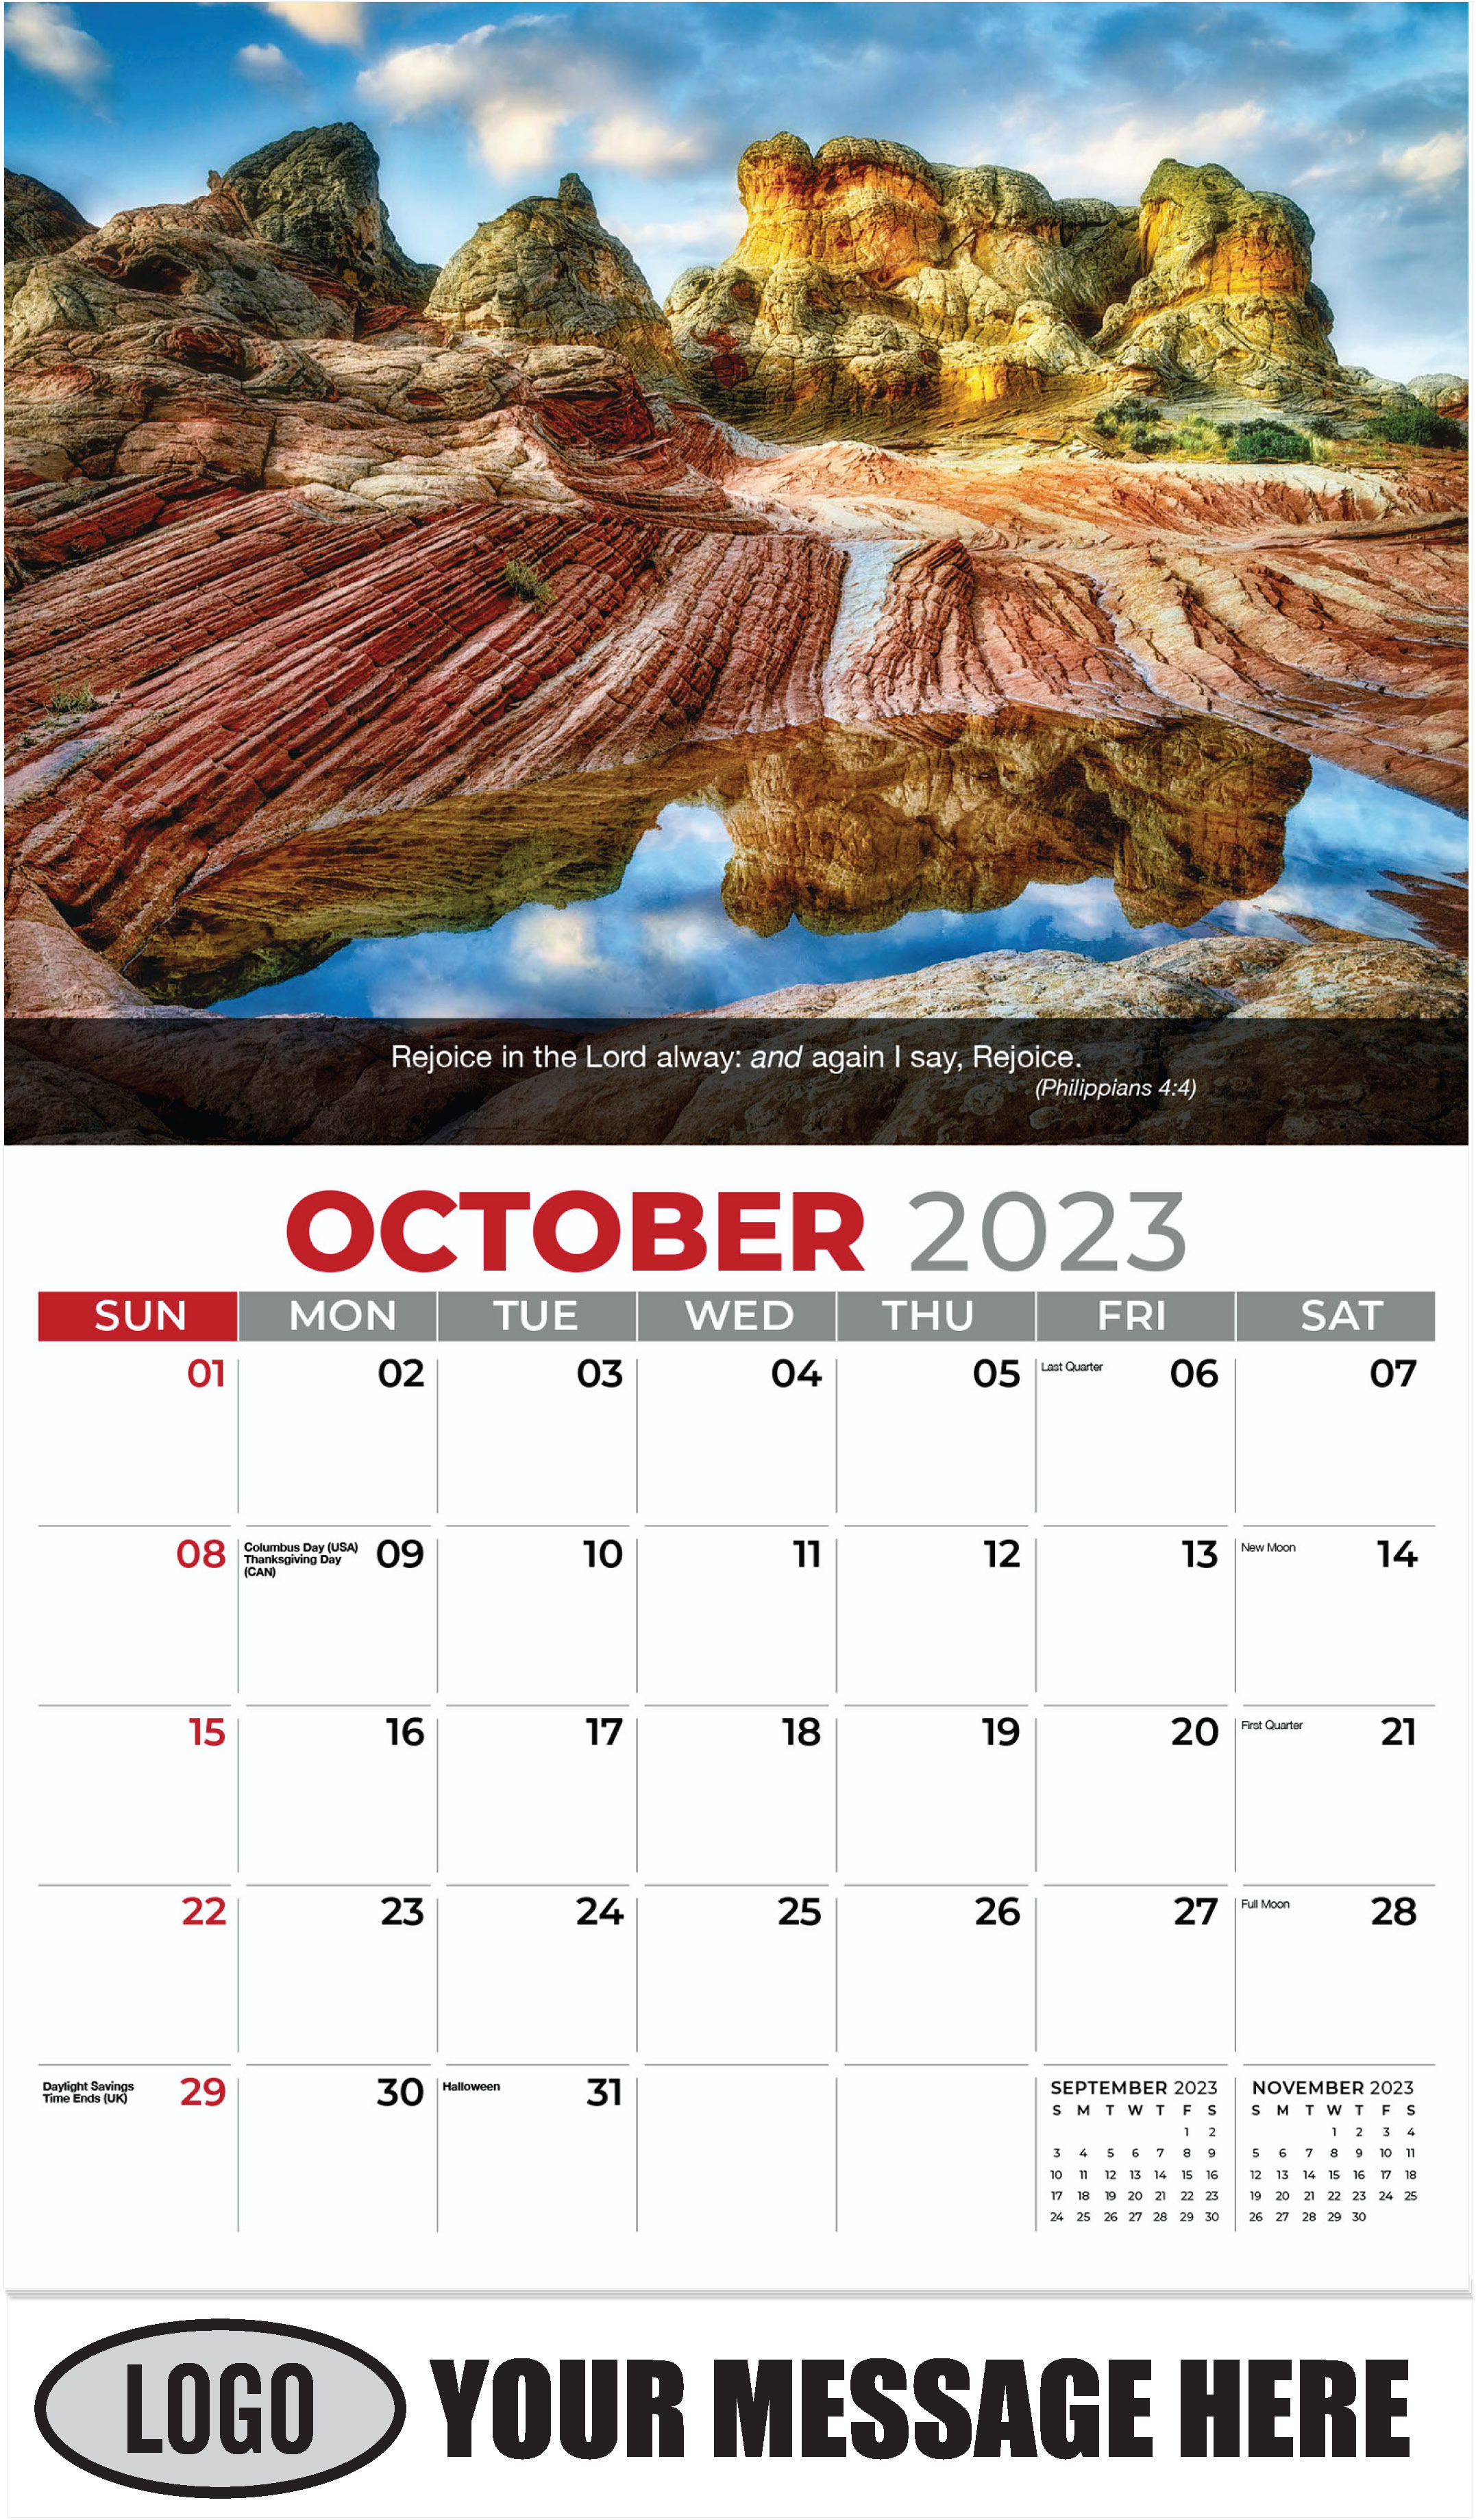 Colourful Rocks - October - Faith Passages 2023 Promotional Calendar